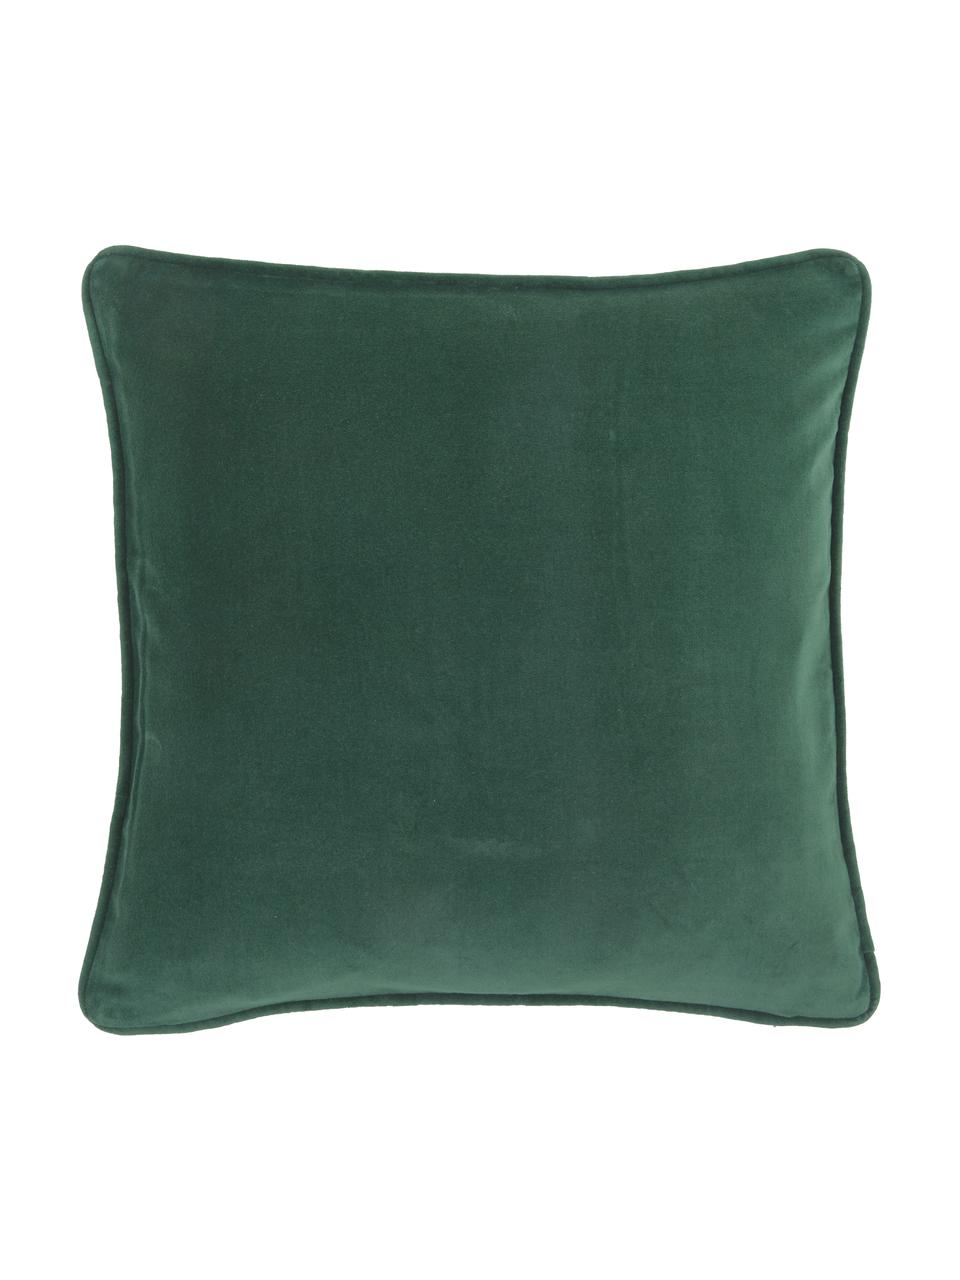 Einfarbige Samt-Kissenhülle Dana in Smaragdgrün, 100% Baumwollsamt, Smaragdgrün, B 40 x L 40 cm